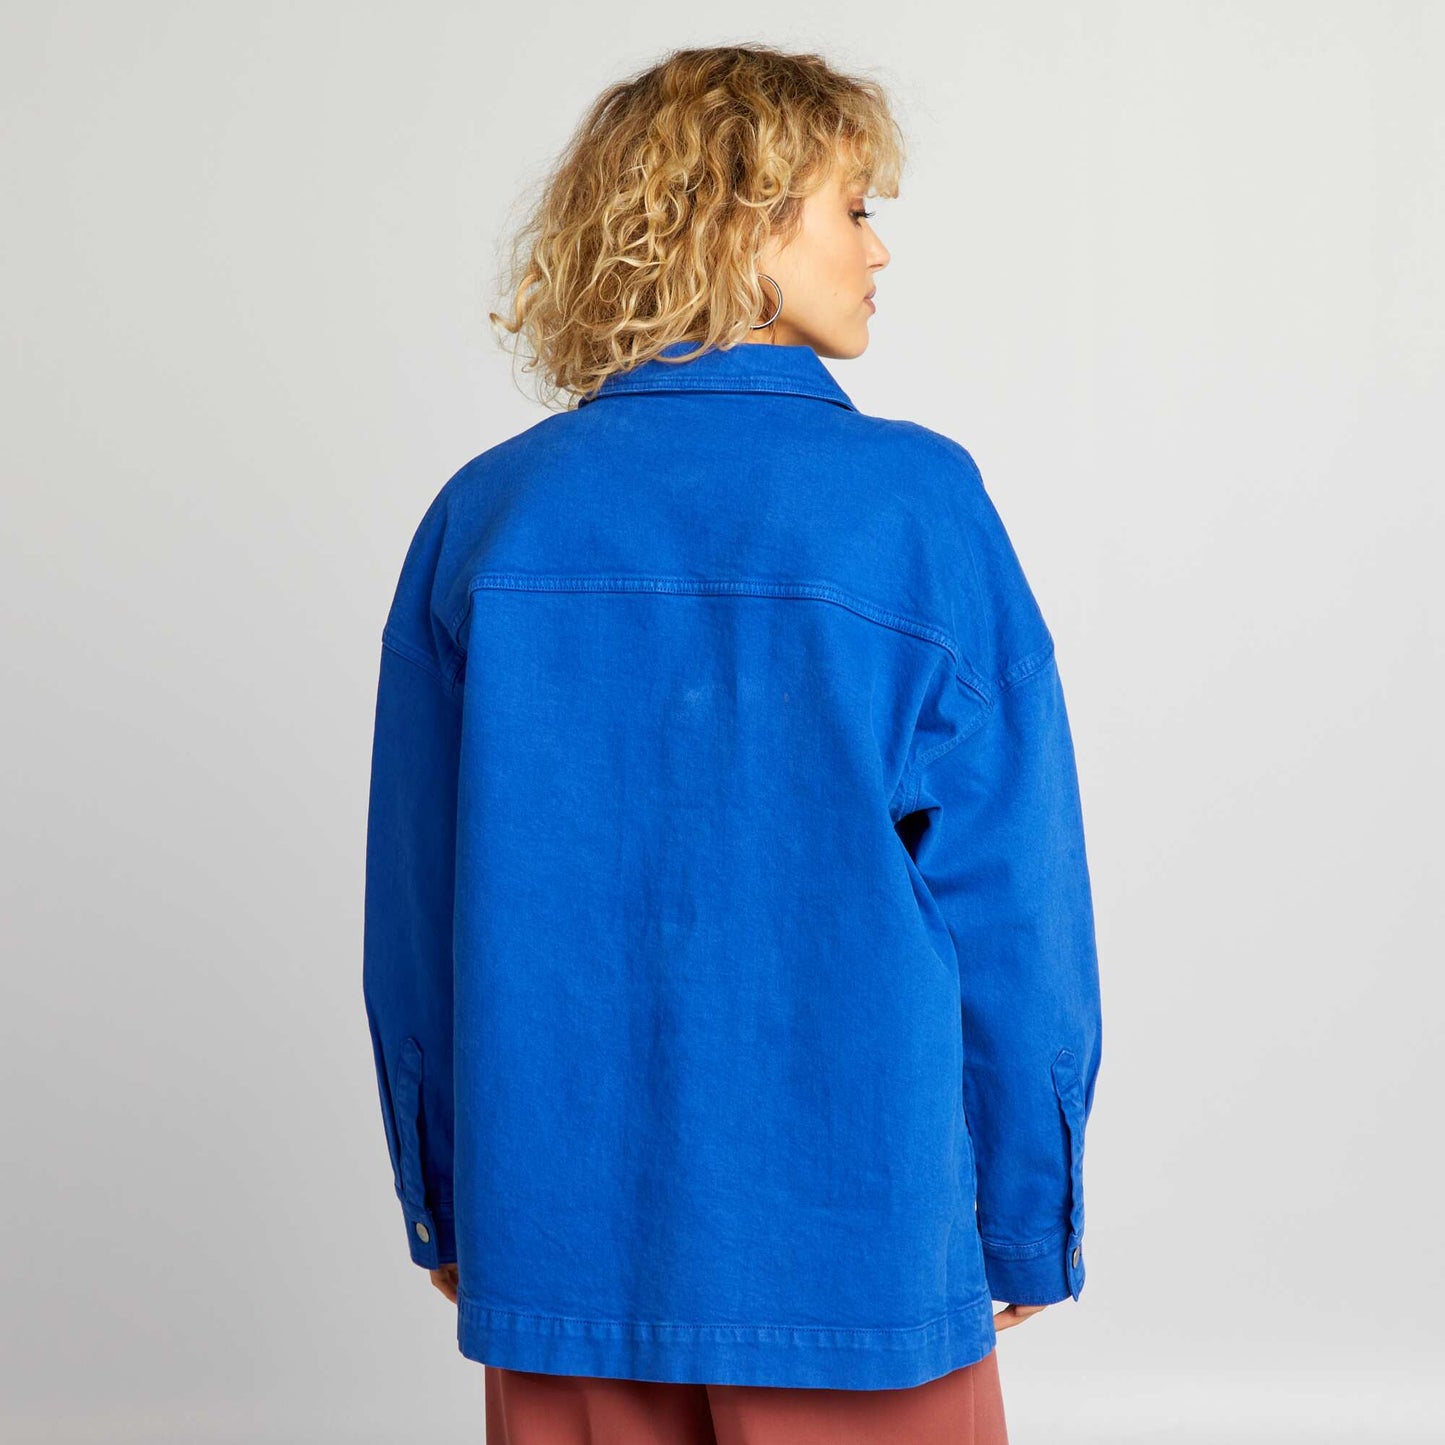 Denim jacket with pockets blue